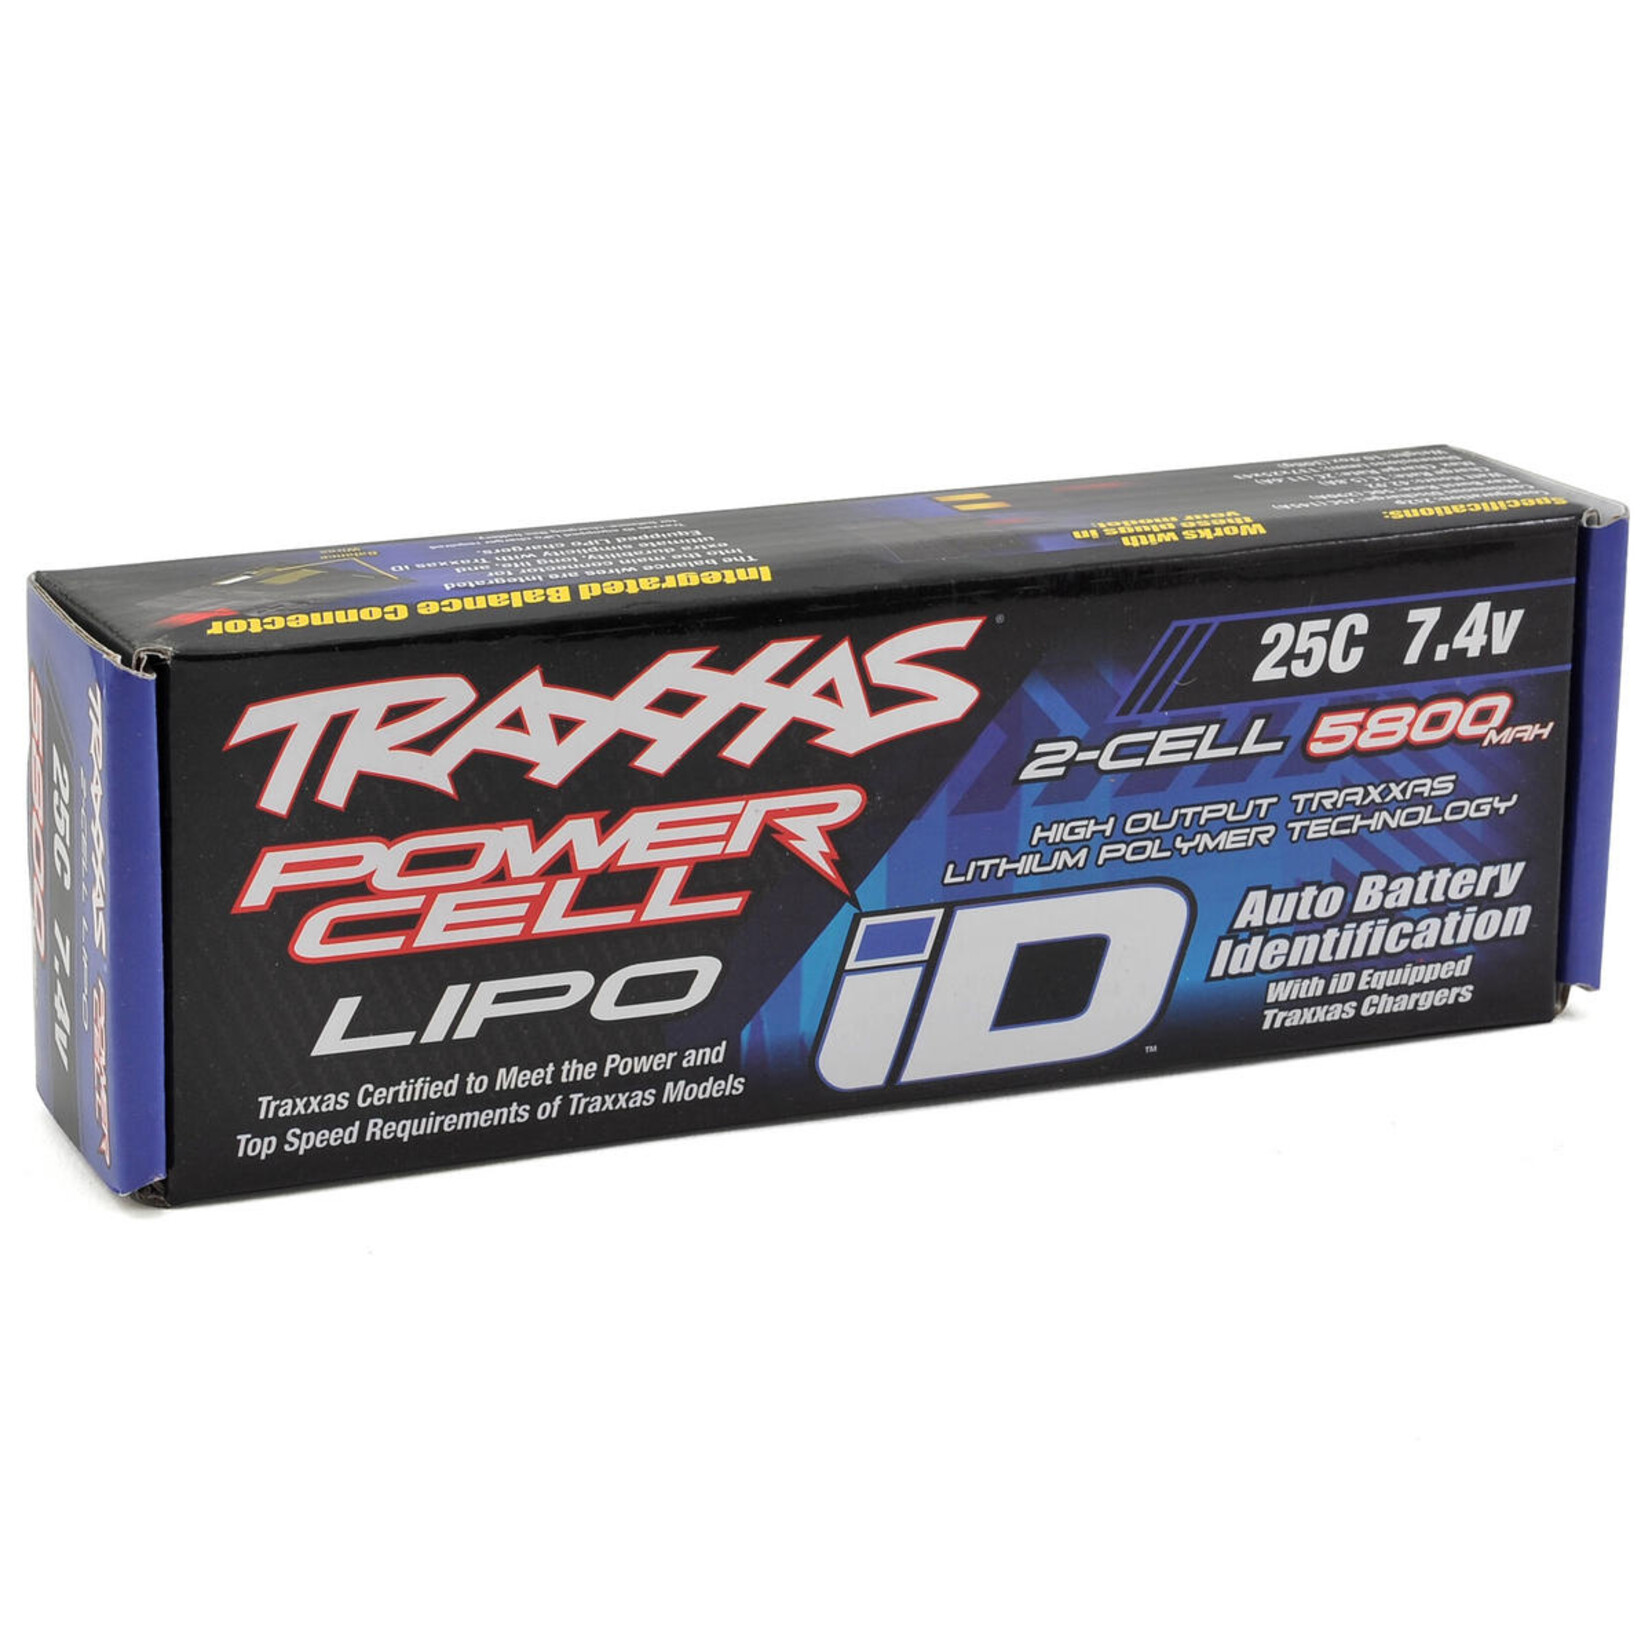 Traxxas Traxxas 2S "Power Cell" 25C LiPo Battery w/iD Traxxas Connector (7.4V/5800mAh) #2843X